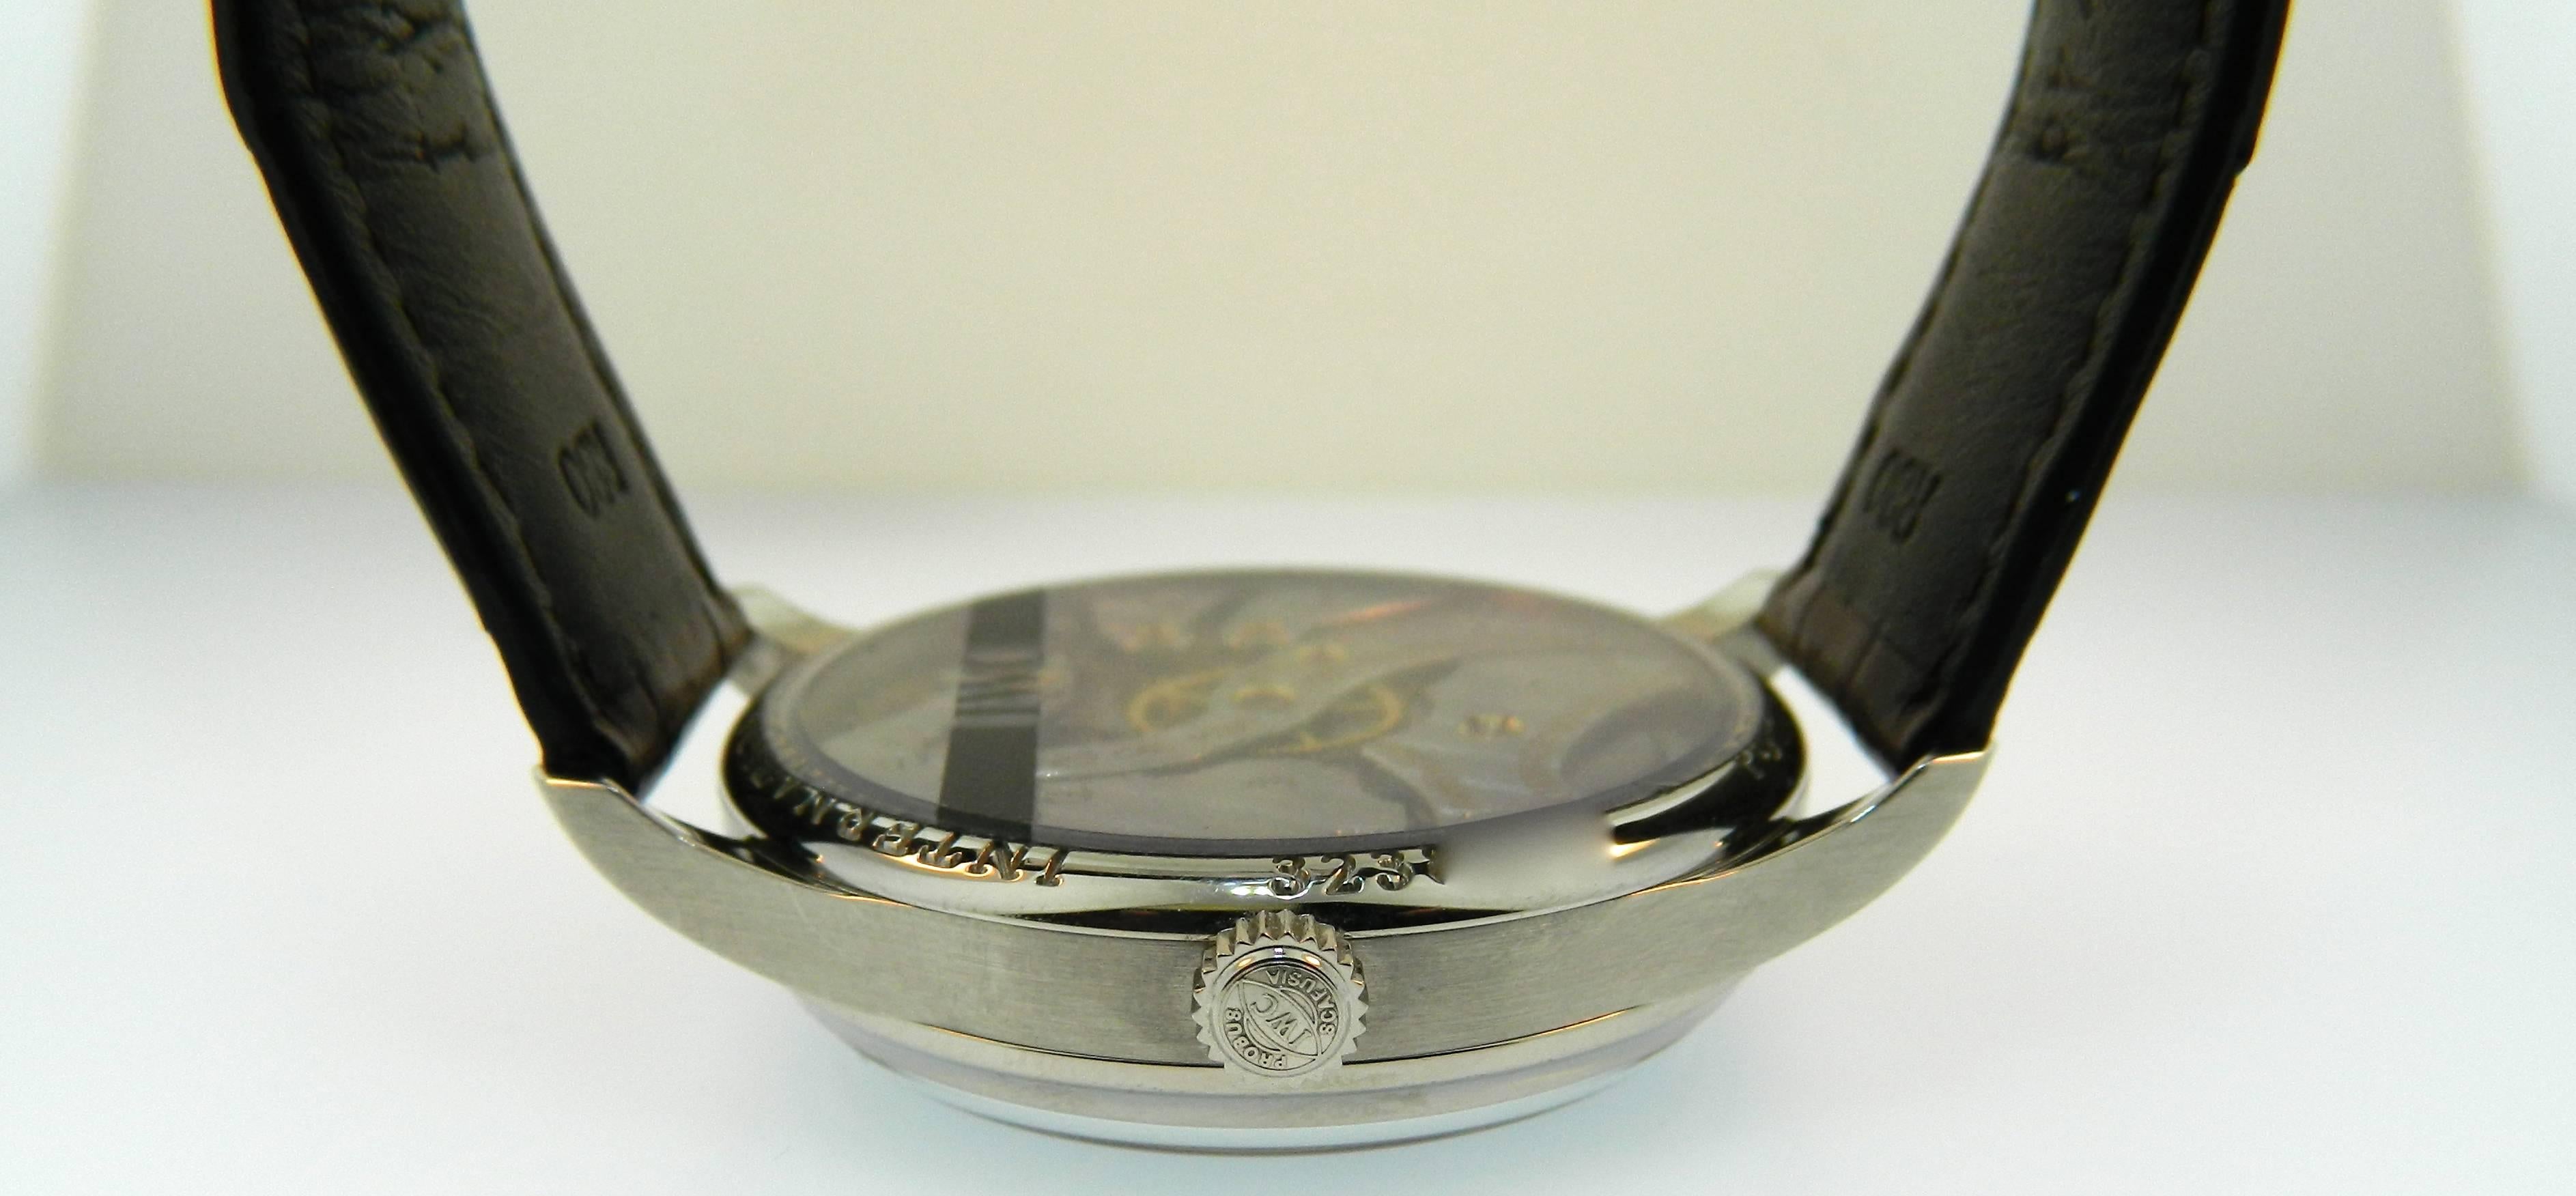 Men's IWC White Gold Portuguese Minute Repeater Wristwatch Ref 5242